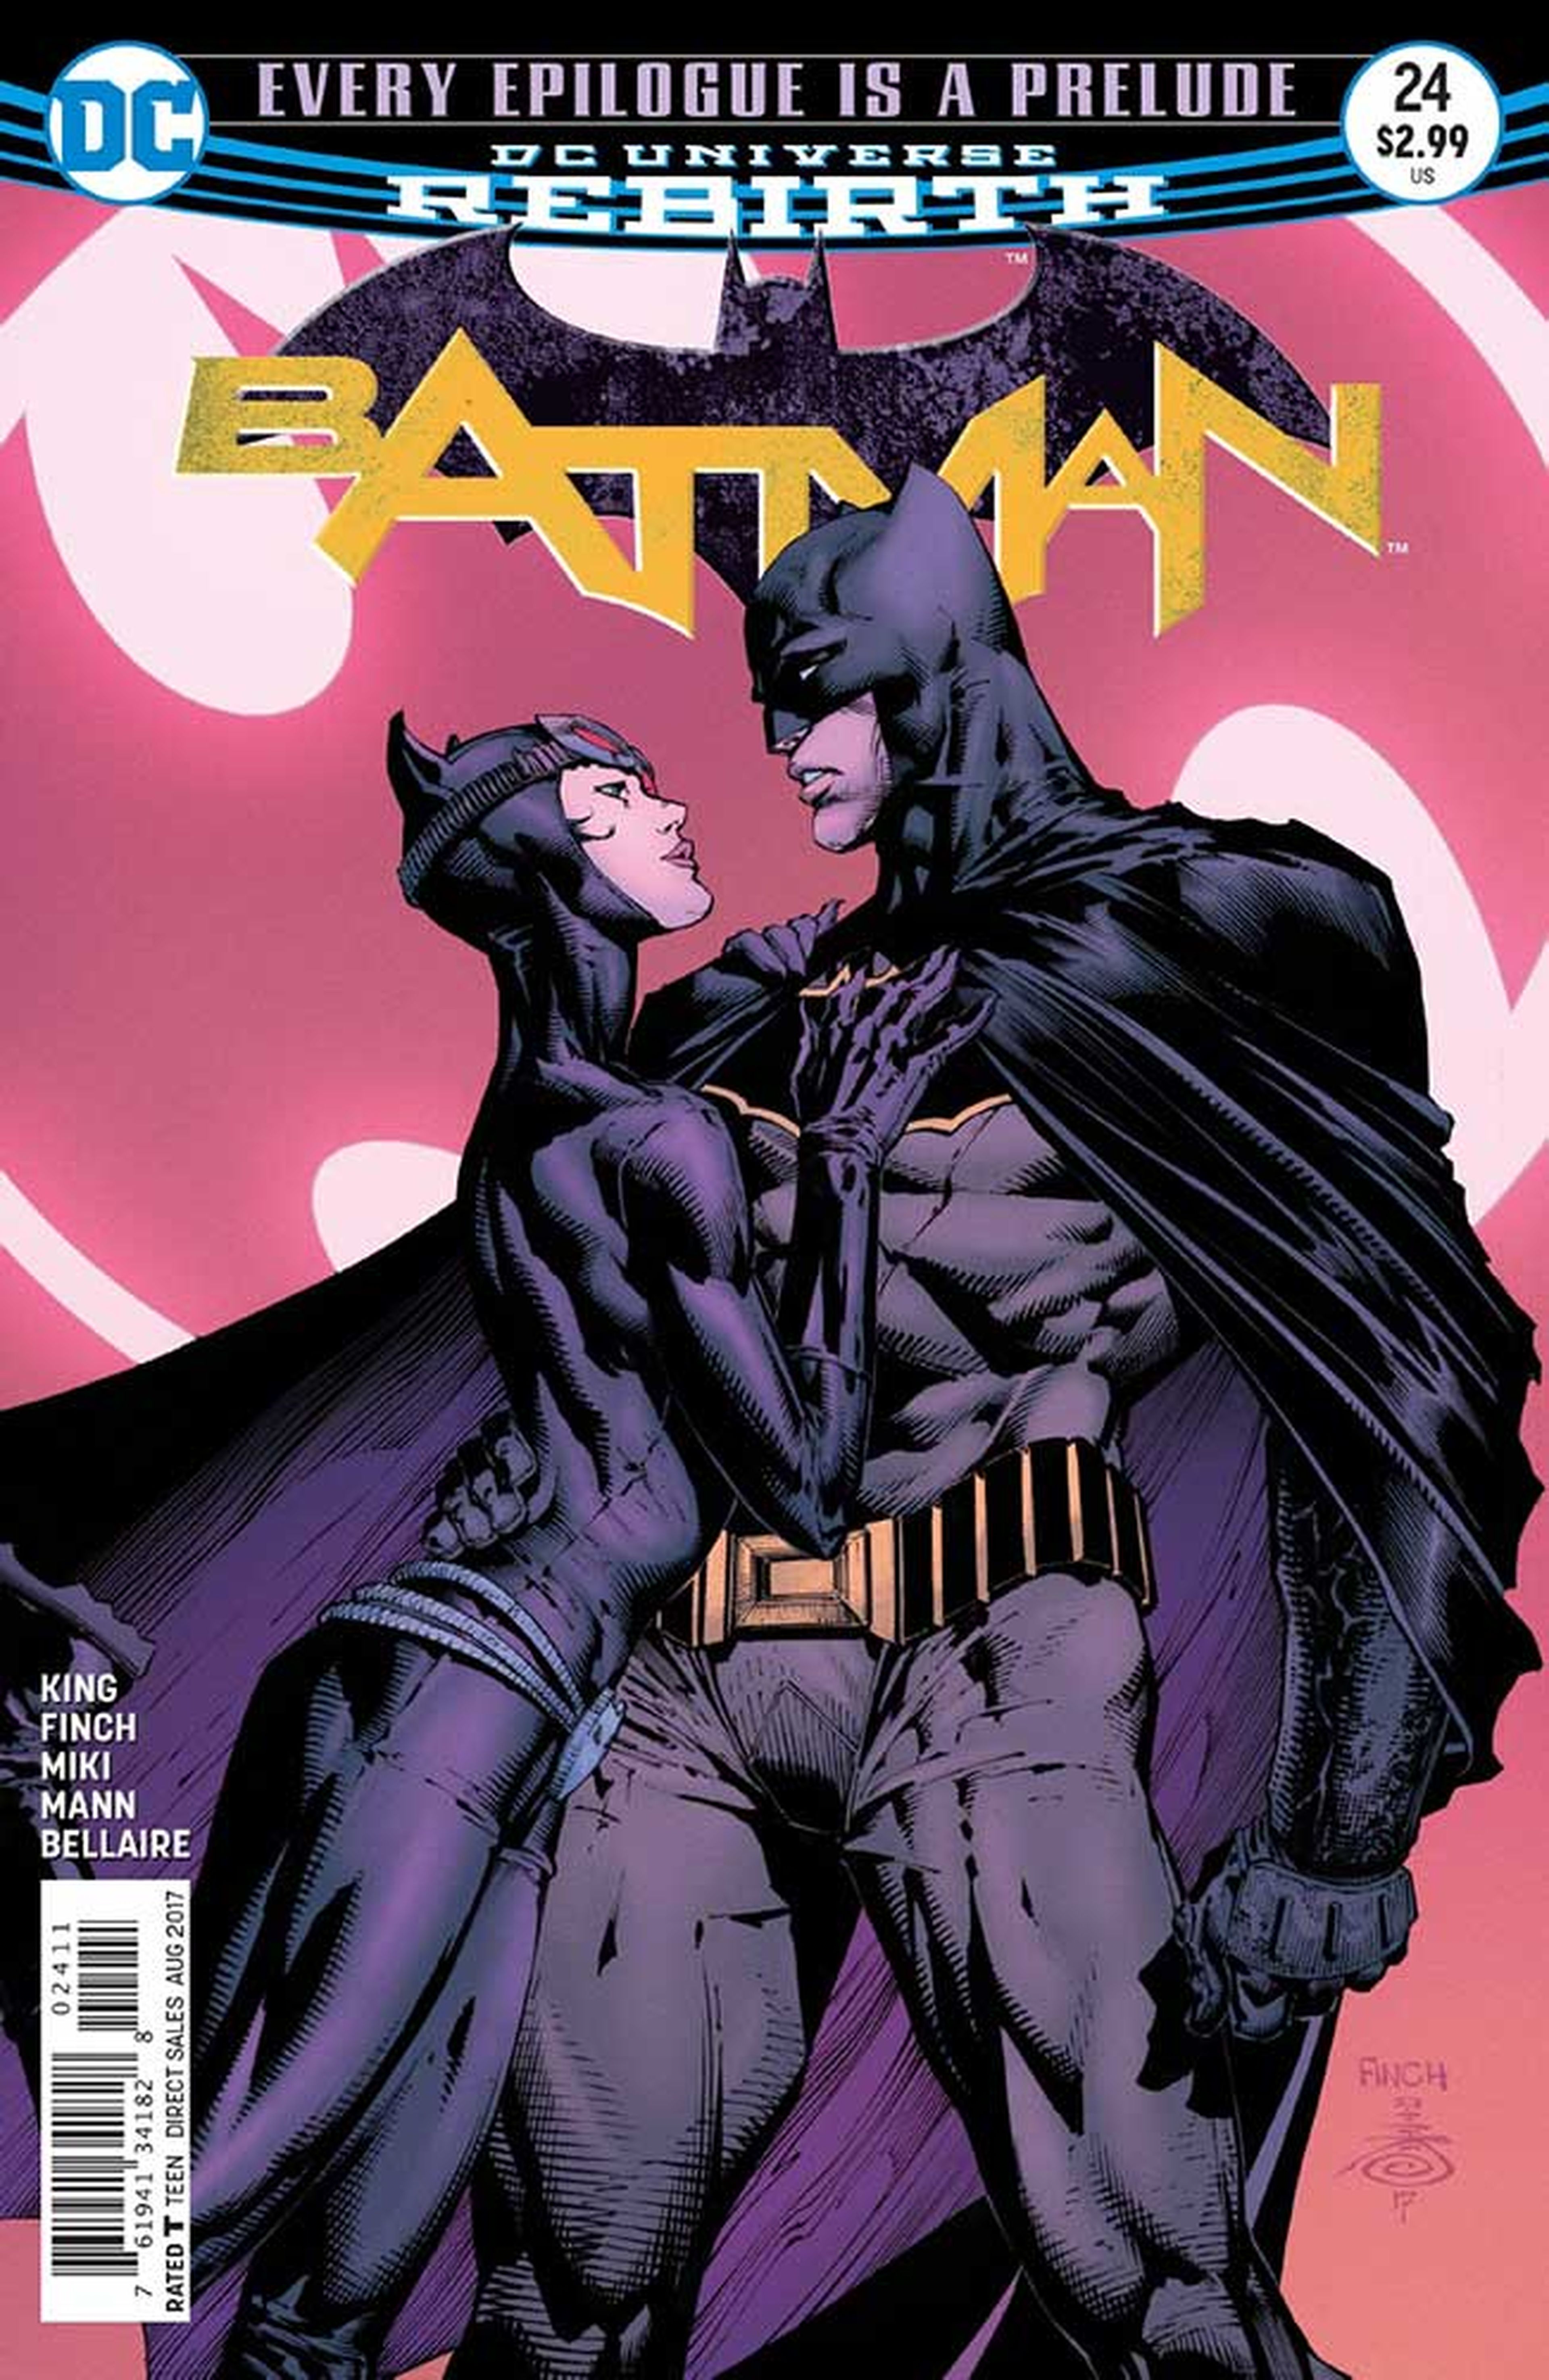 Batman pedirá matrimonio a Catwoman